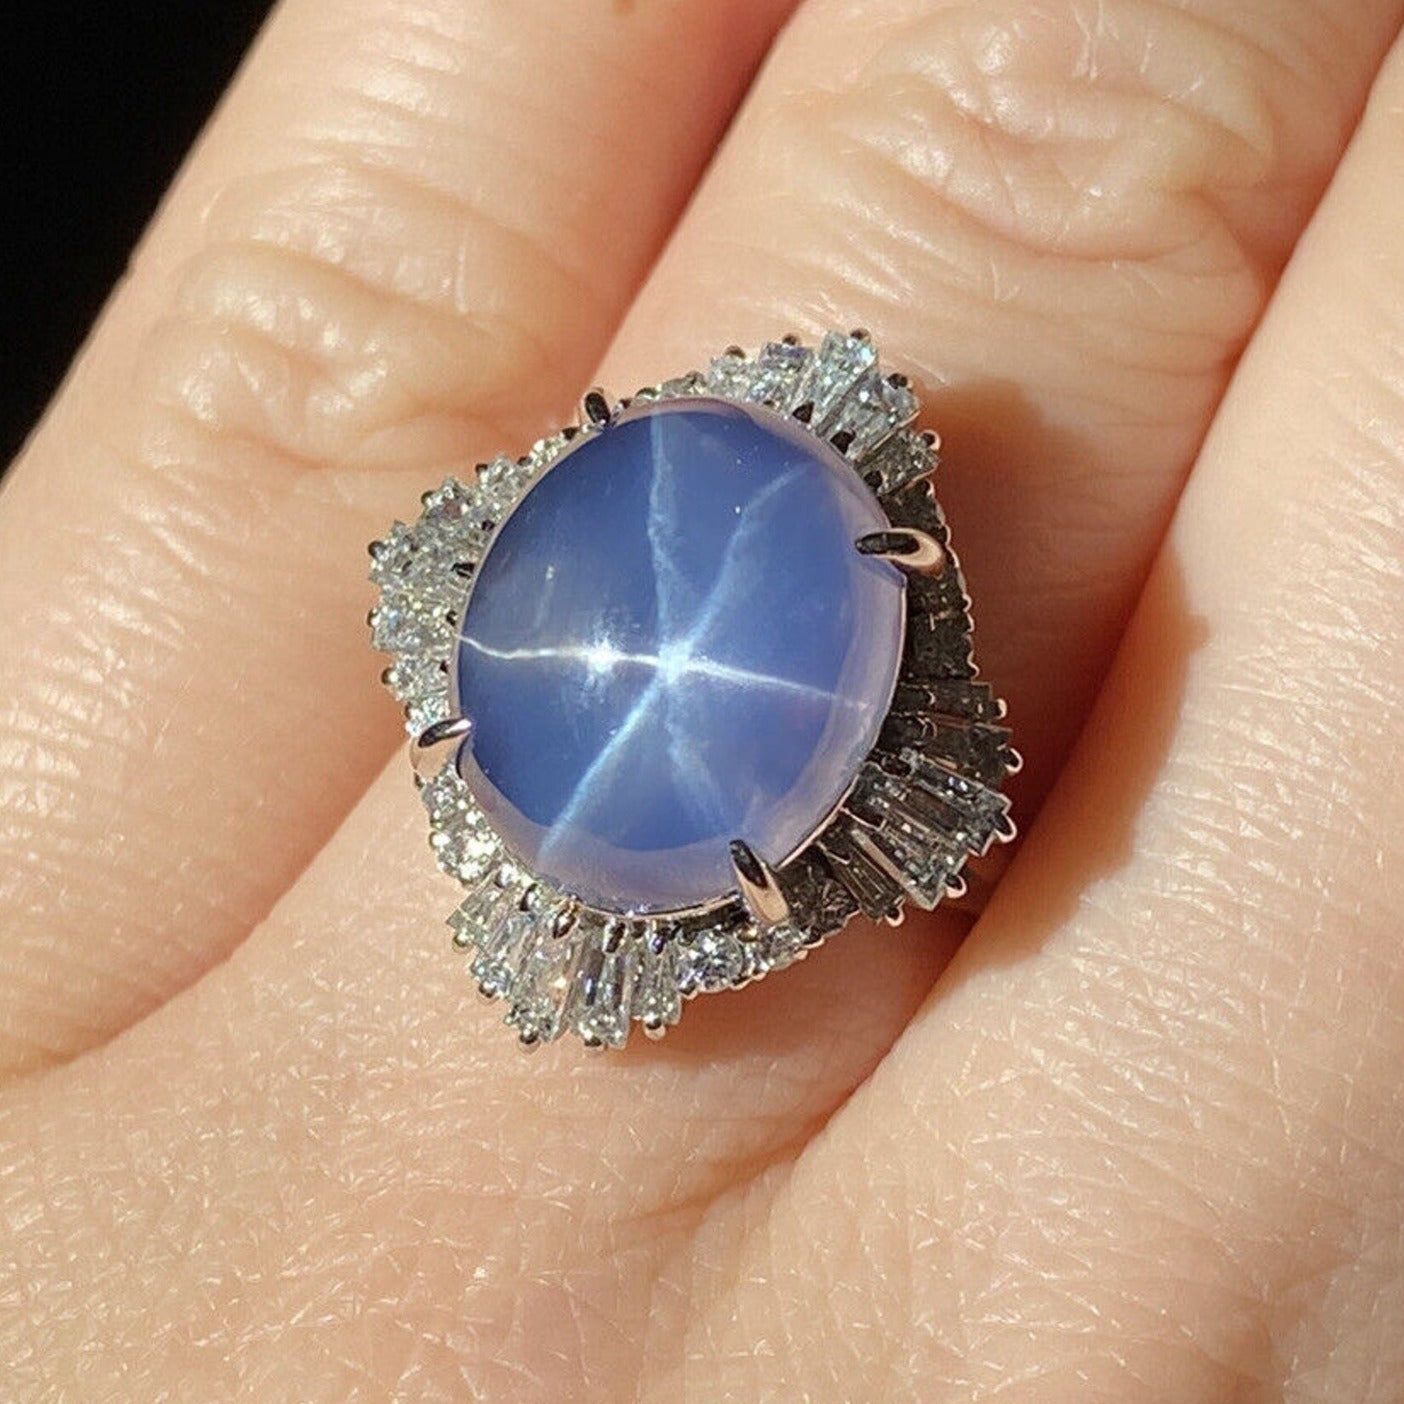 GIA 12.95 cts. Unheated Blue Star Sapphire & Diamond Ring in Platinum - HM2218AE